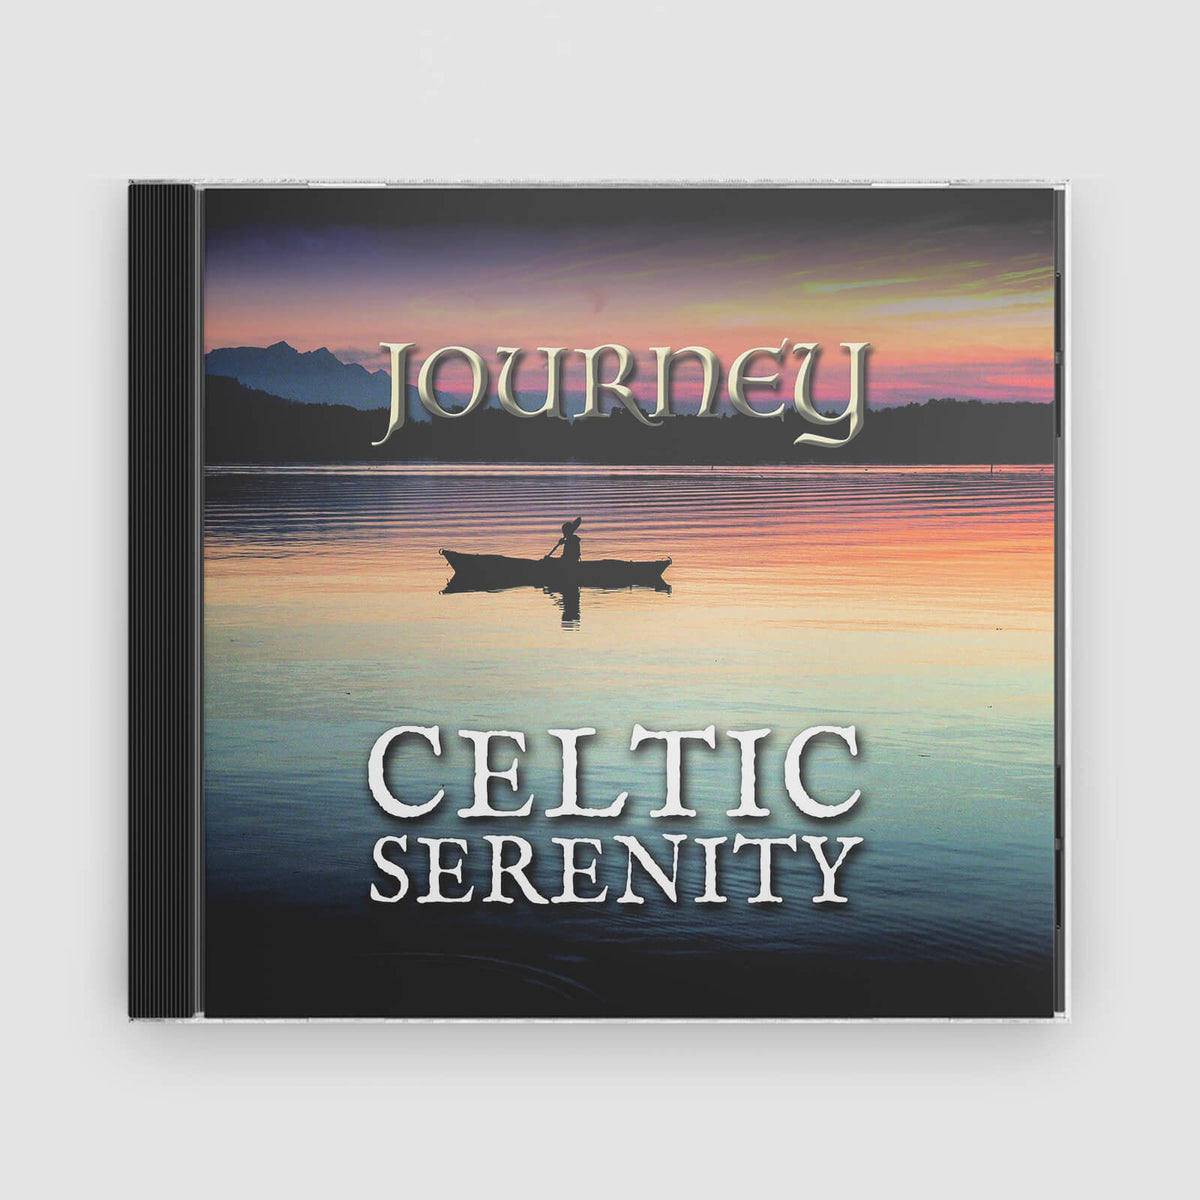 Celtic Serenity : Journey